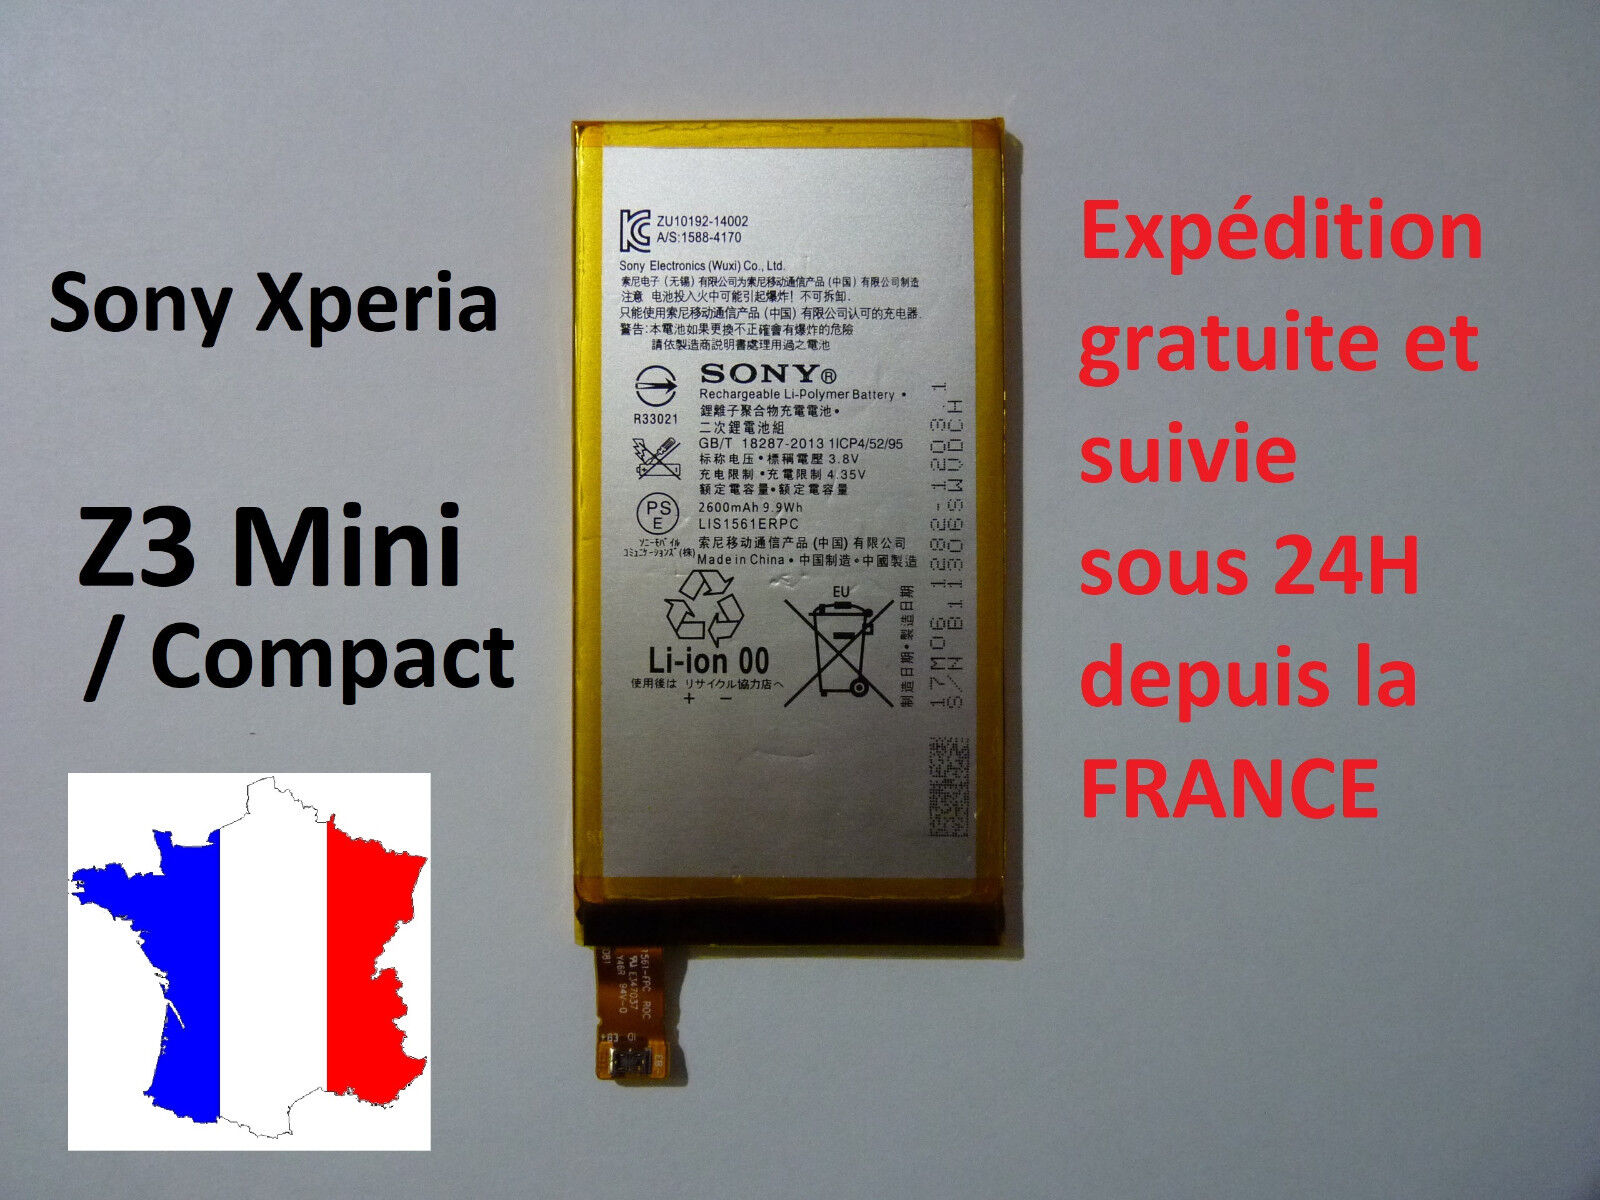 New Austin Mall Battery Surrogate Sony Xperia 35% OFF Z3 Compact Ref:LIS1561ERP Mini